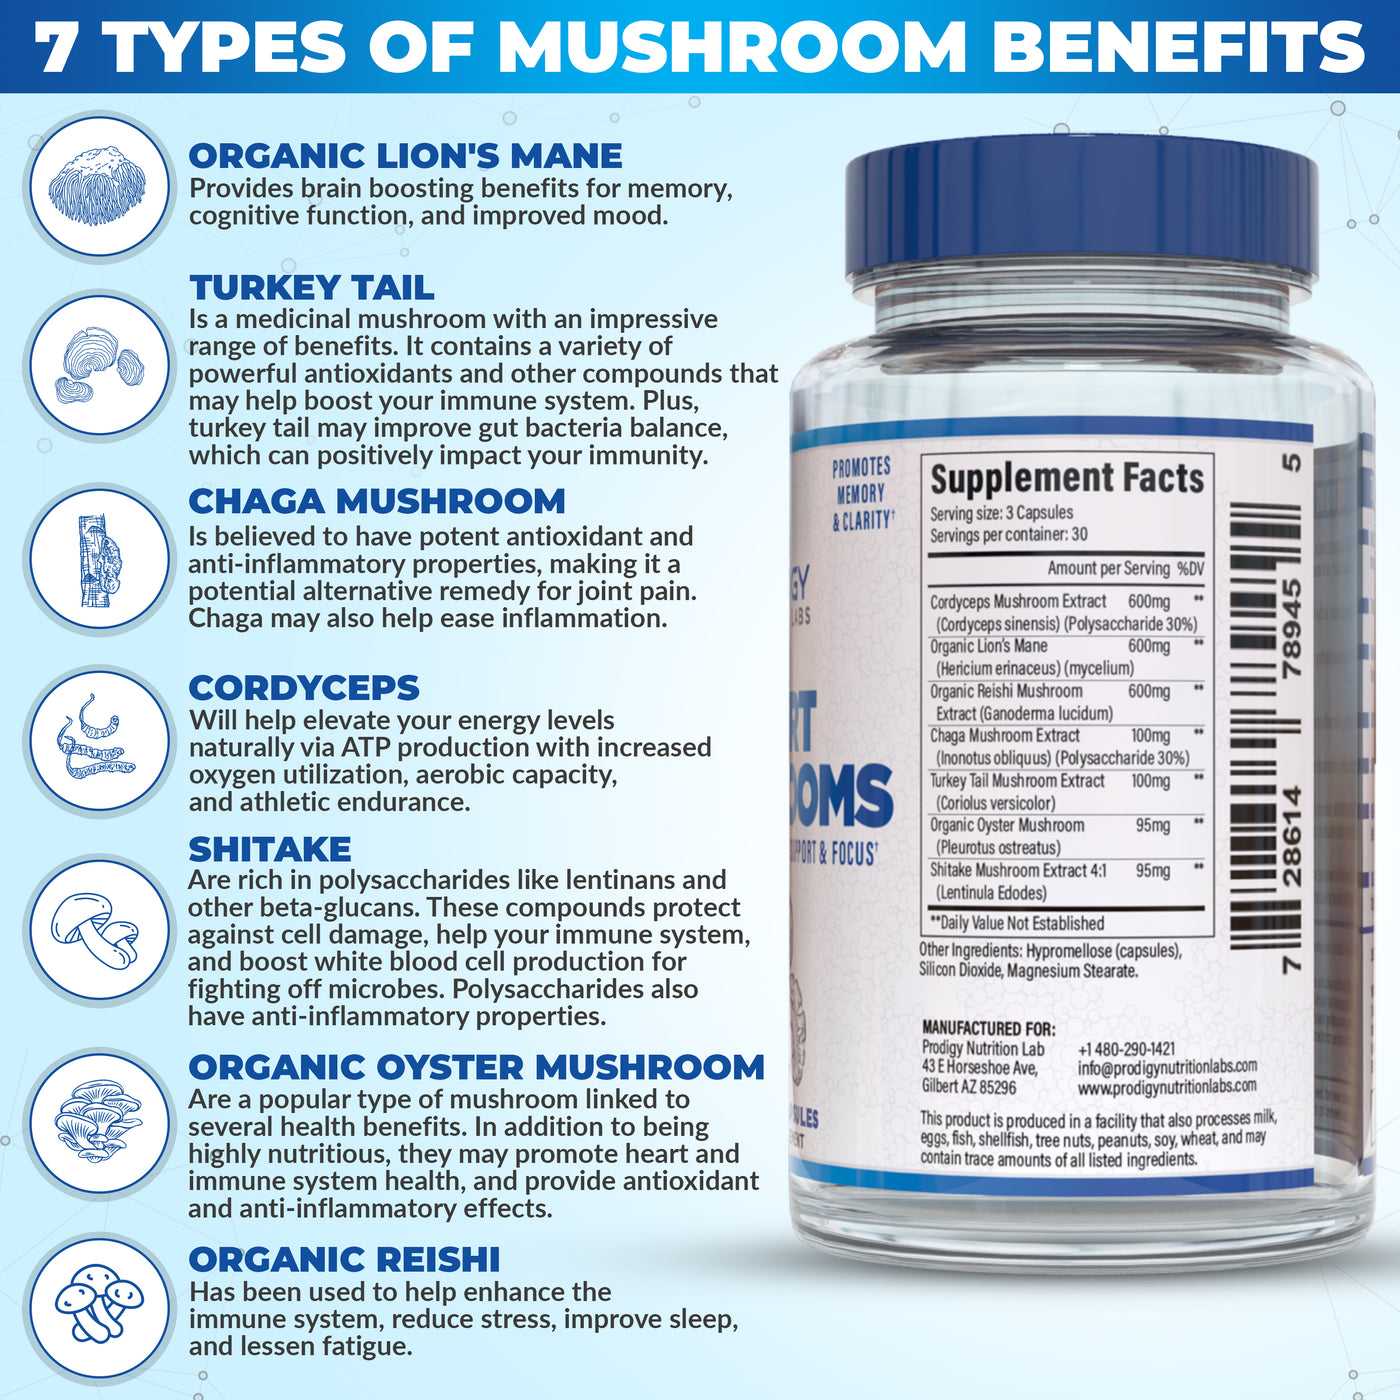 Smart Mushrooms